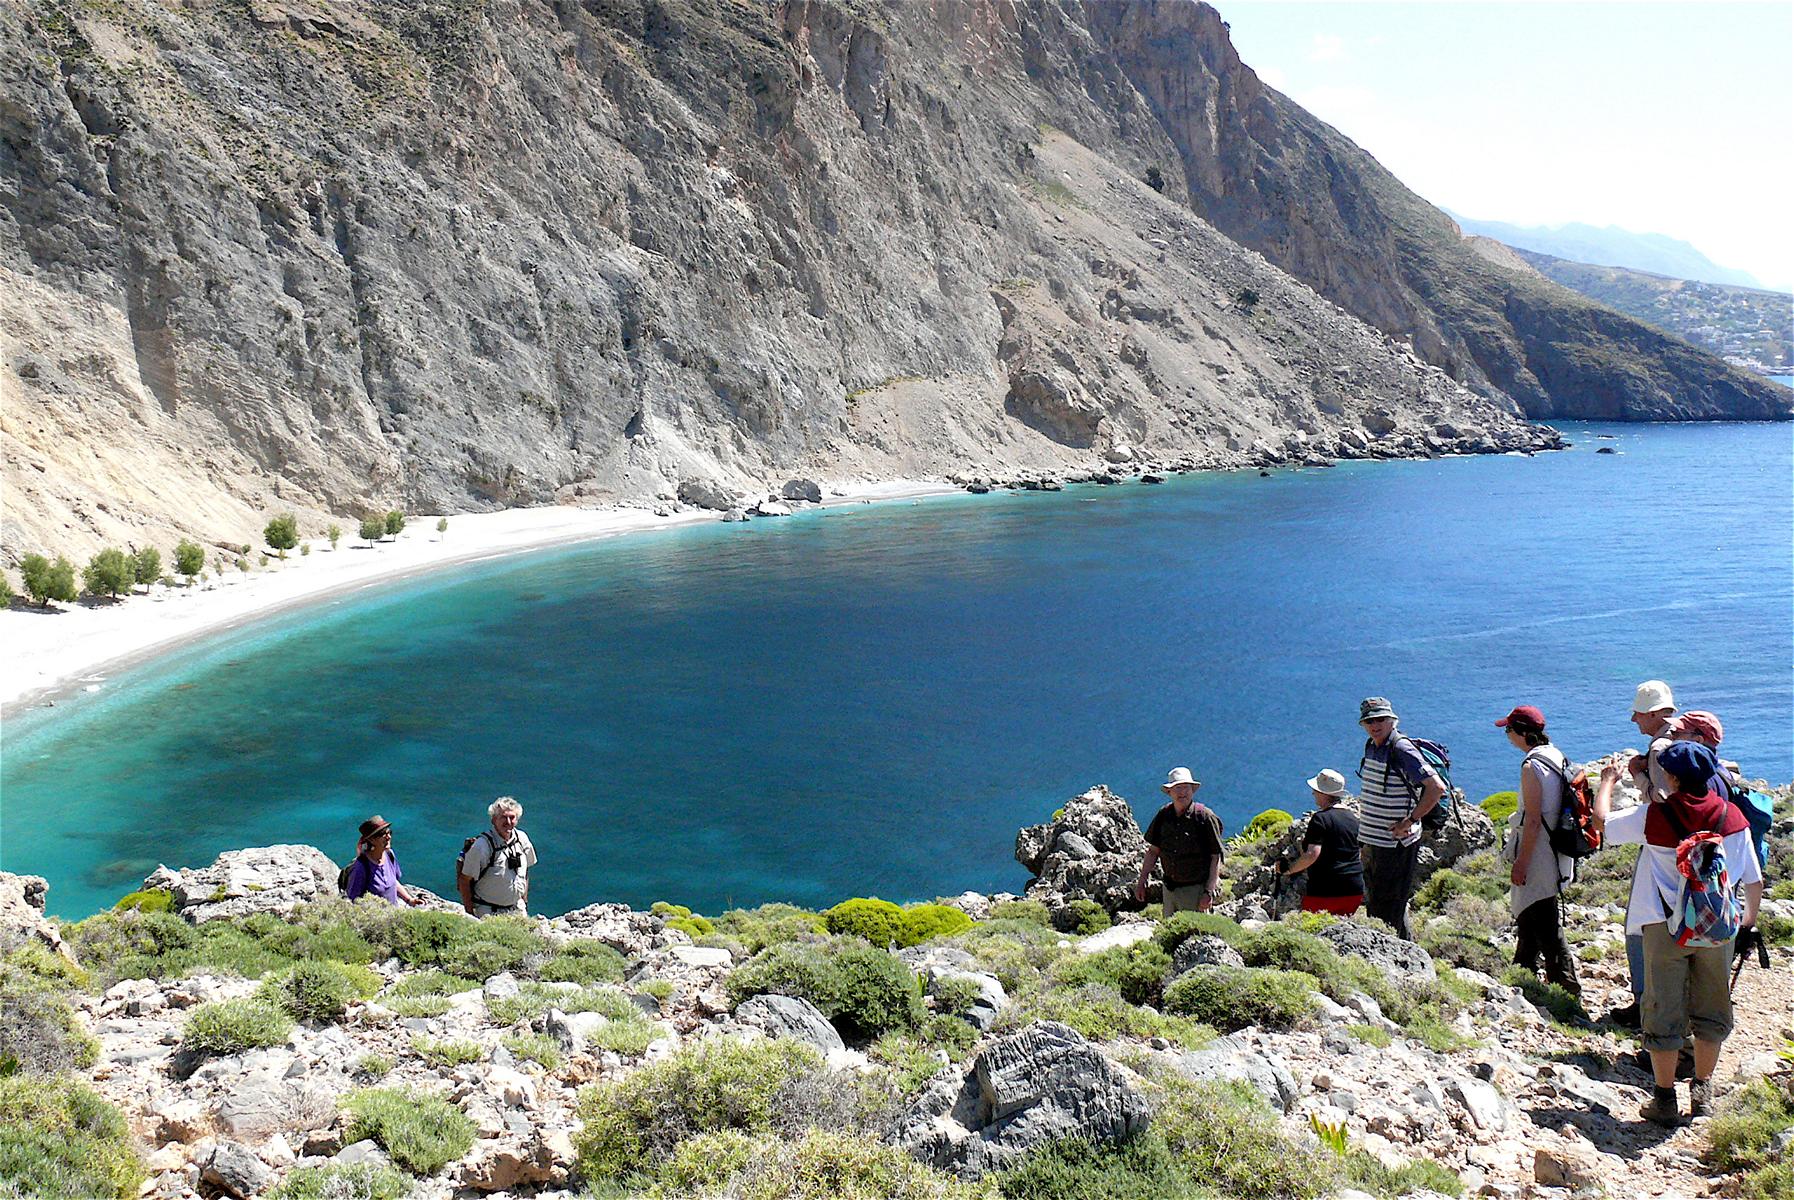 Kurze Pause an der azurblauen Kste Kretas - Lupe Reisen